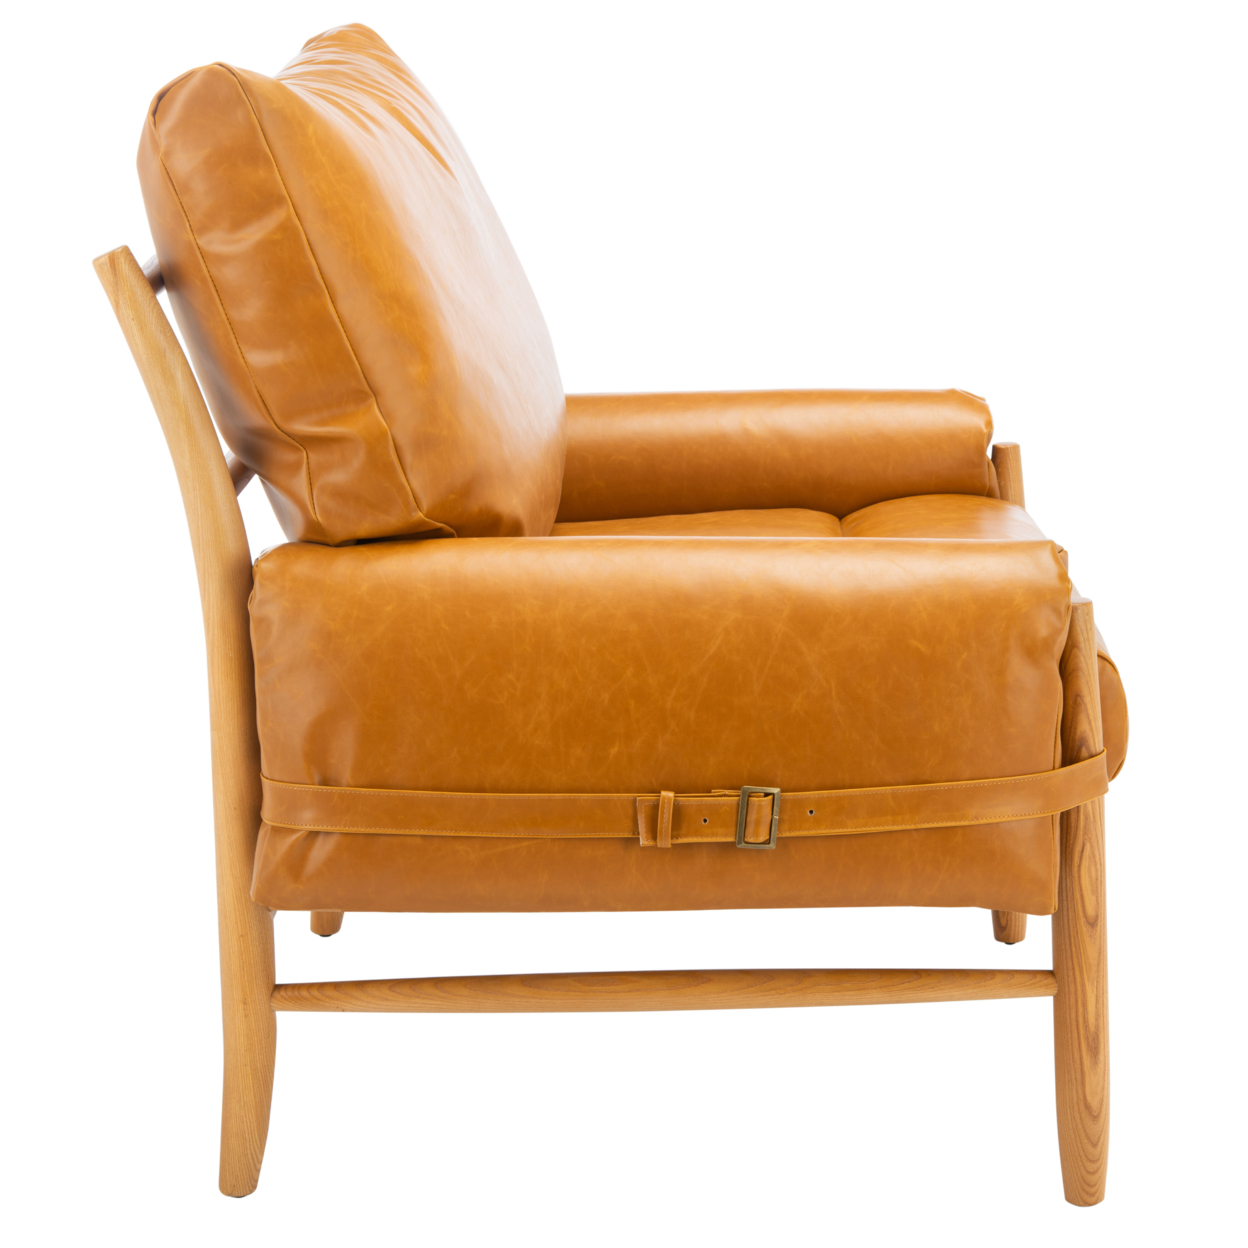 SAFAVIEH Oslo Mid-Century Arm Chair Caramel / Natural